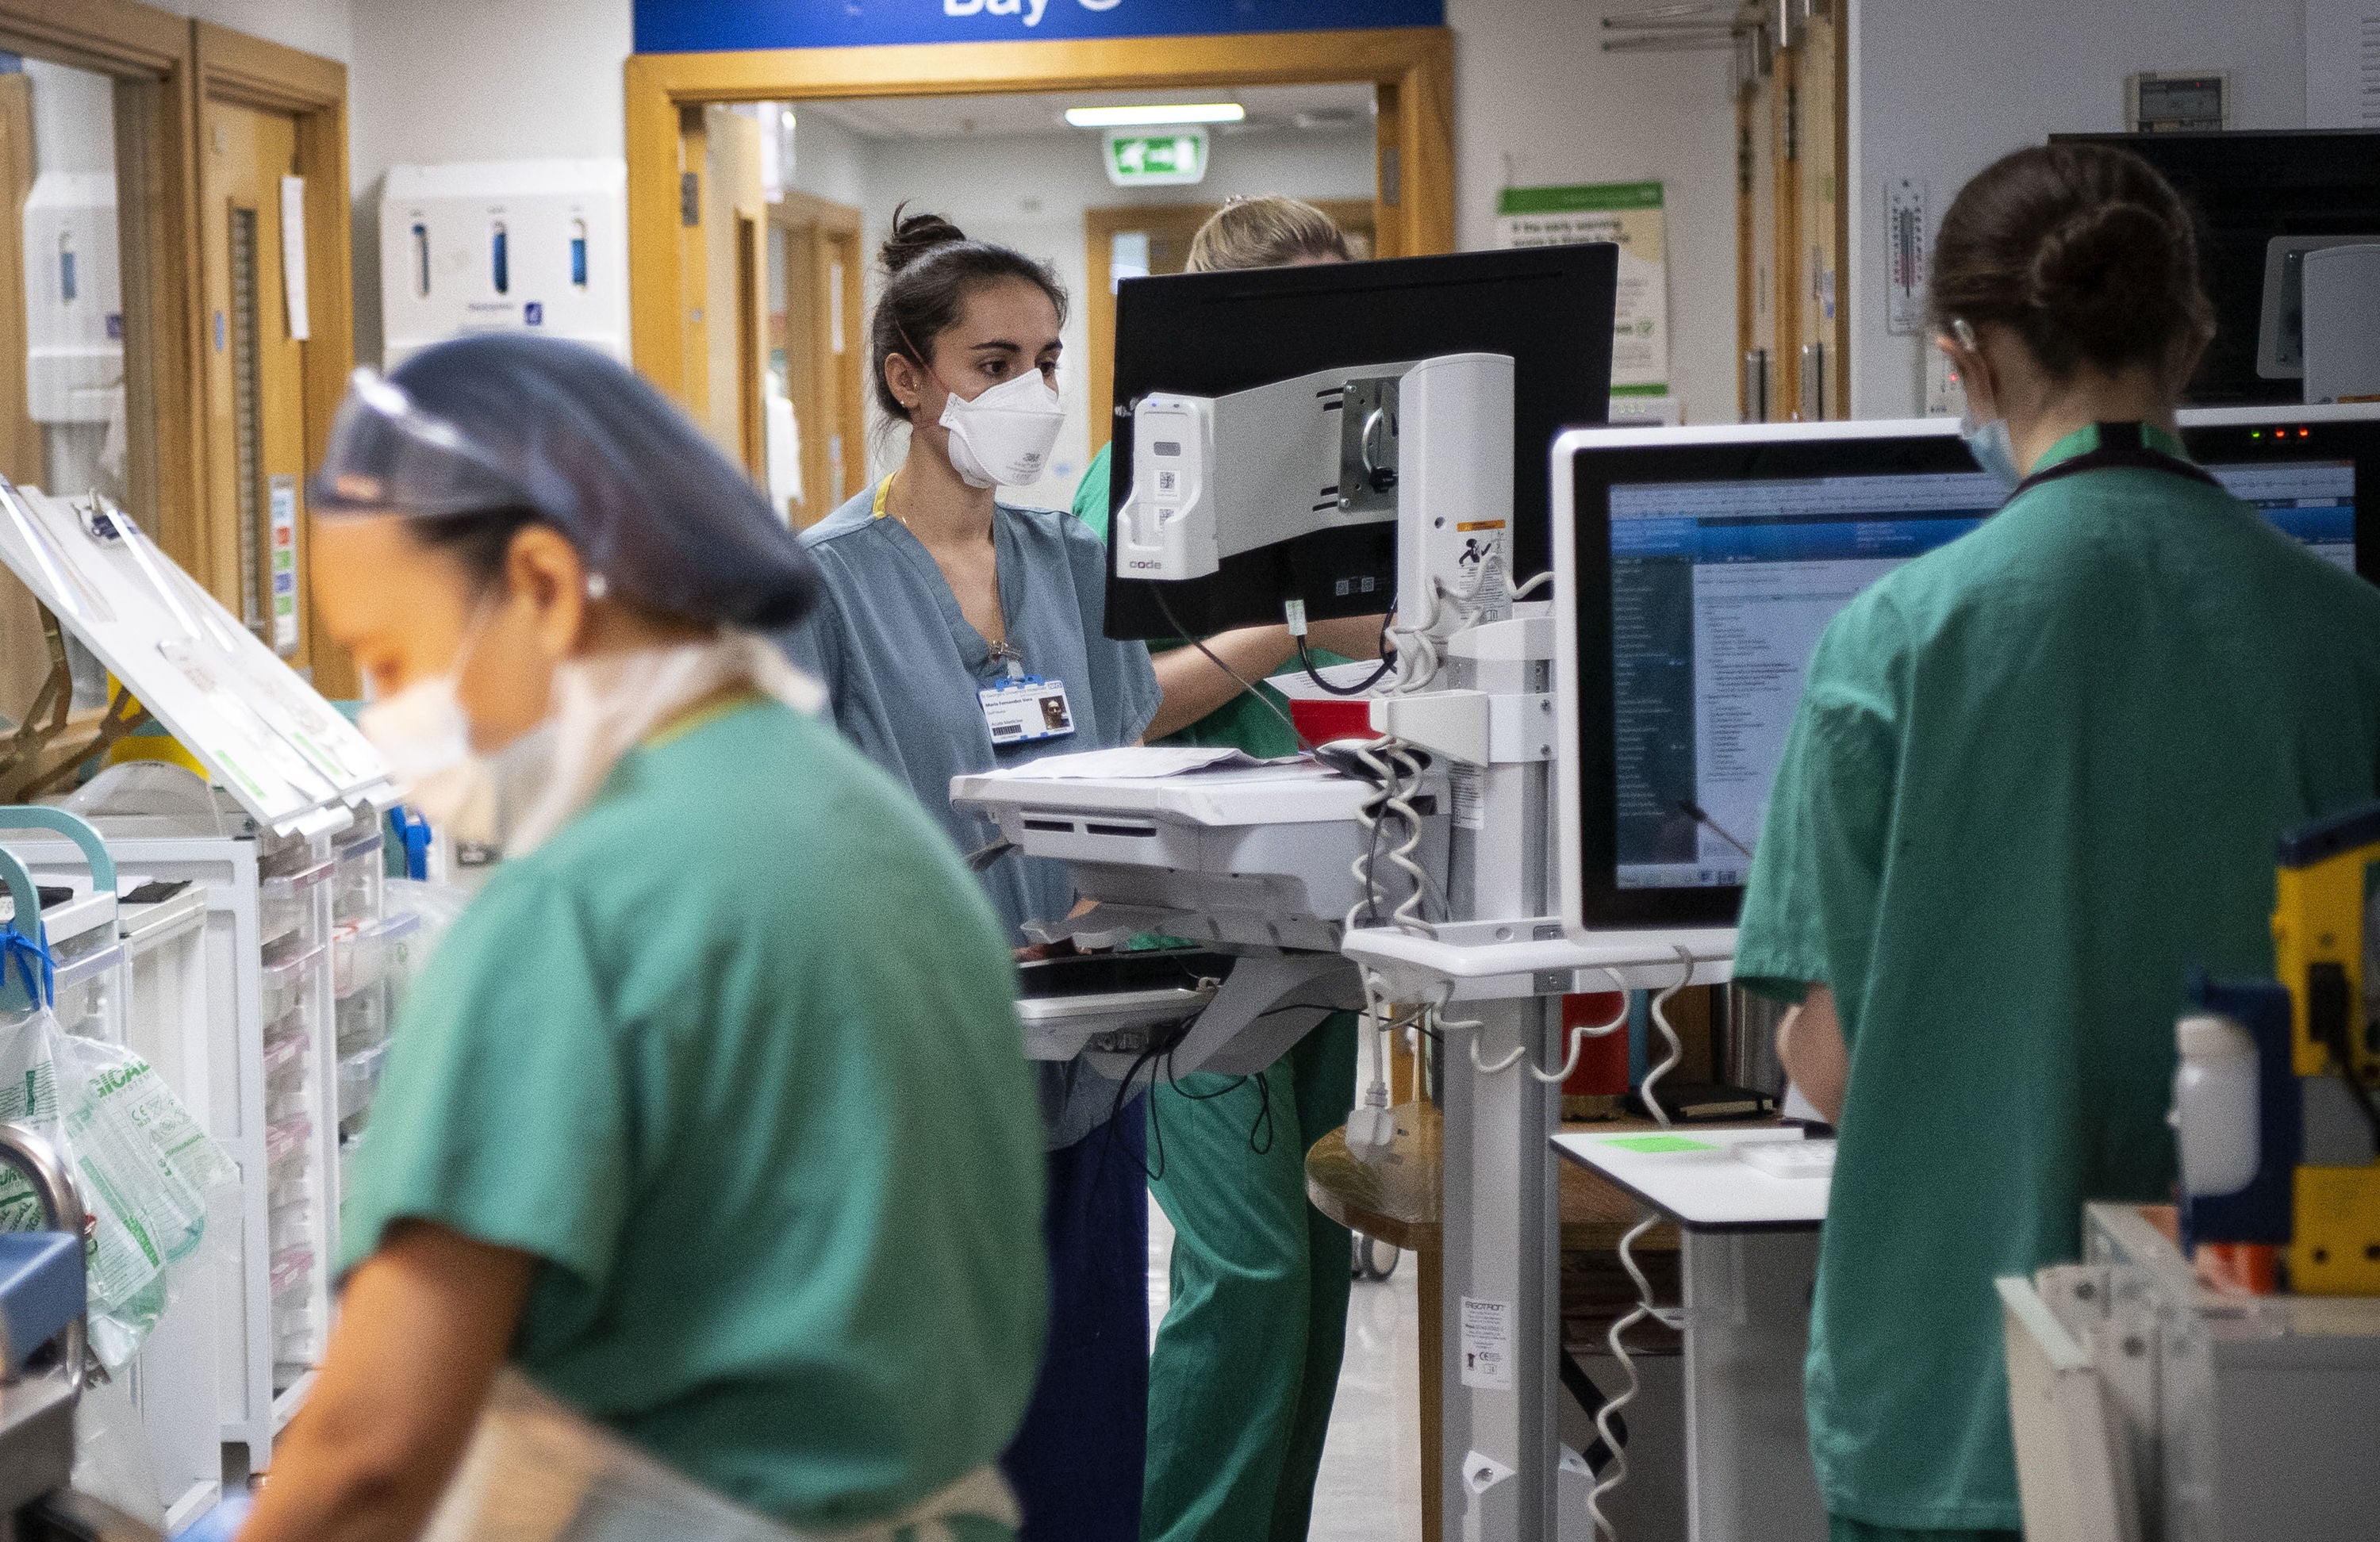 Representative image of staff nurses on a hospital ward